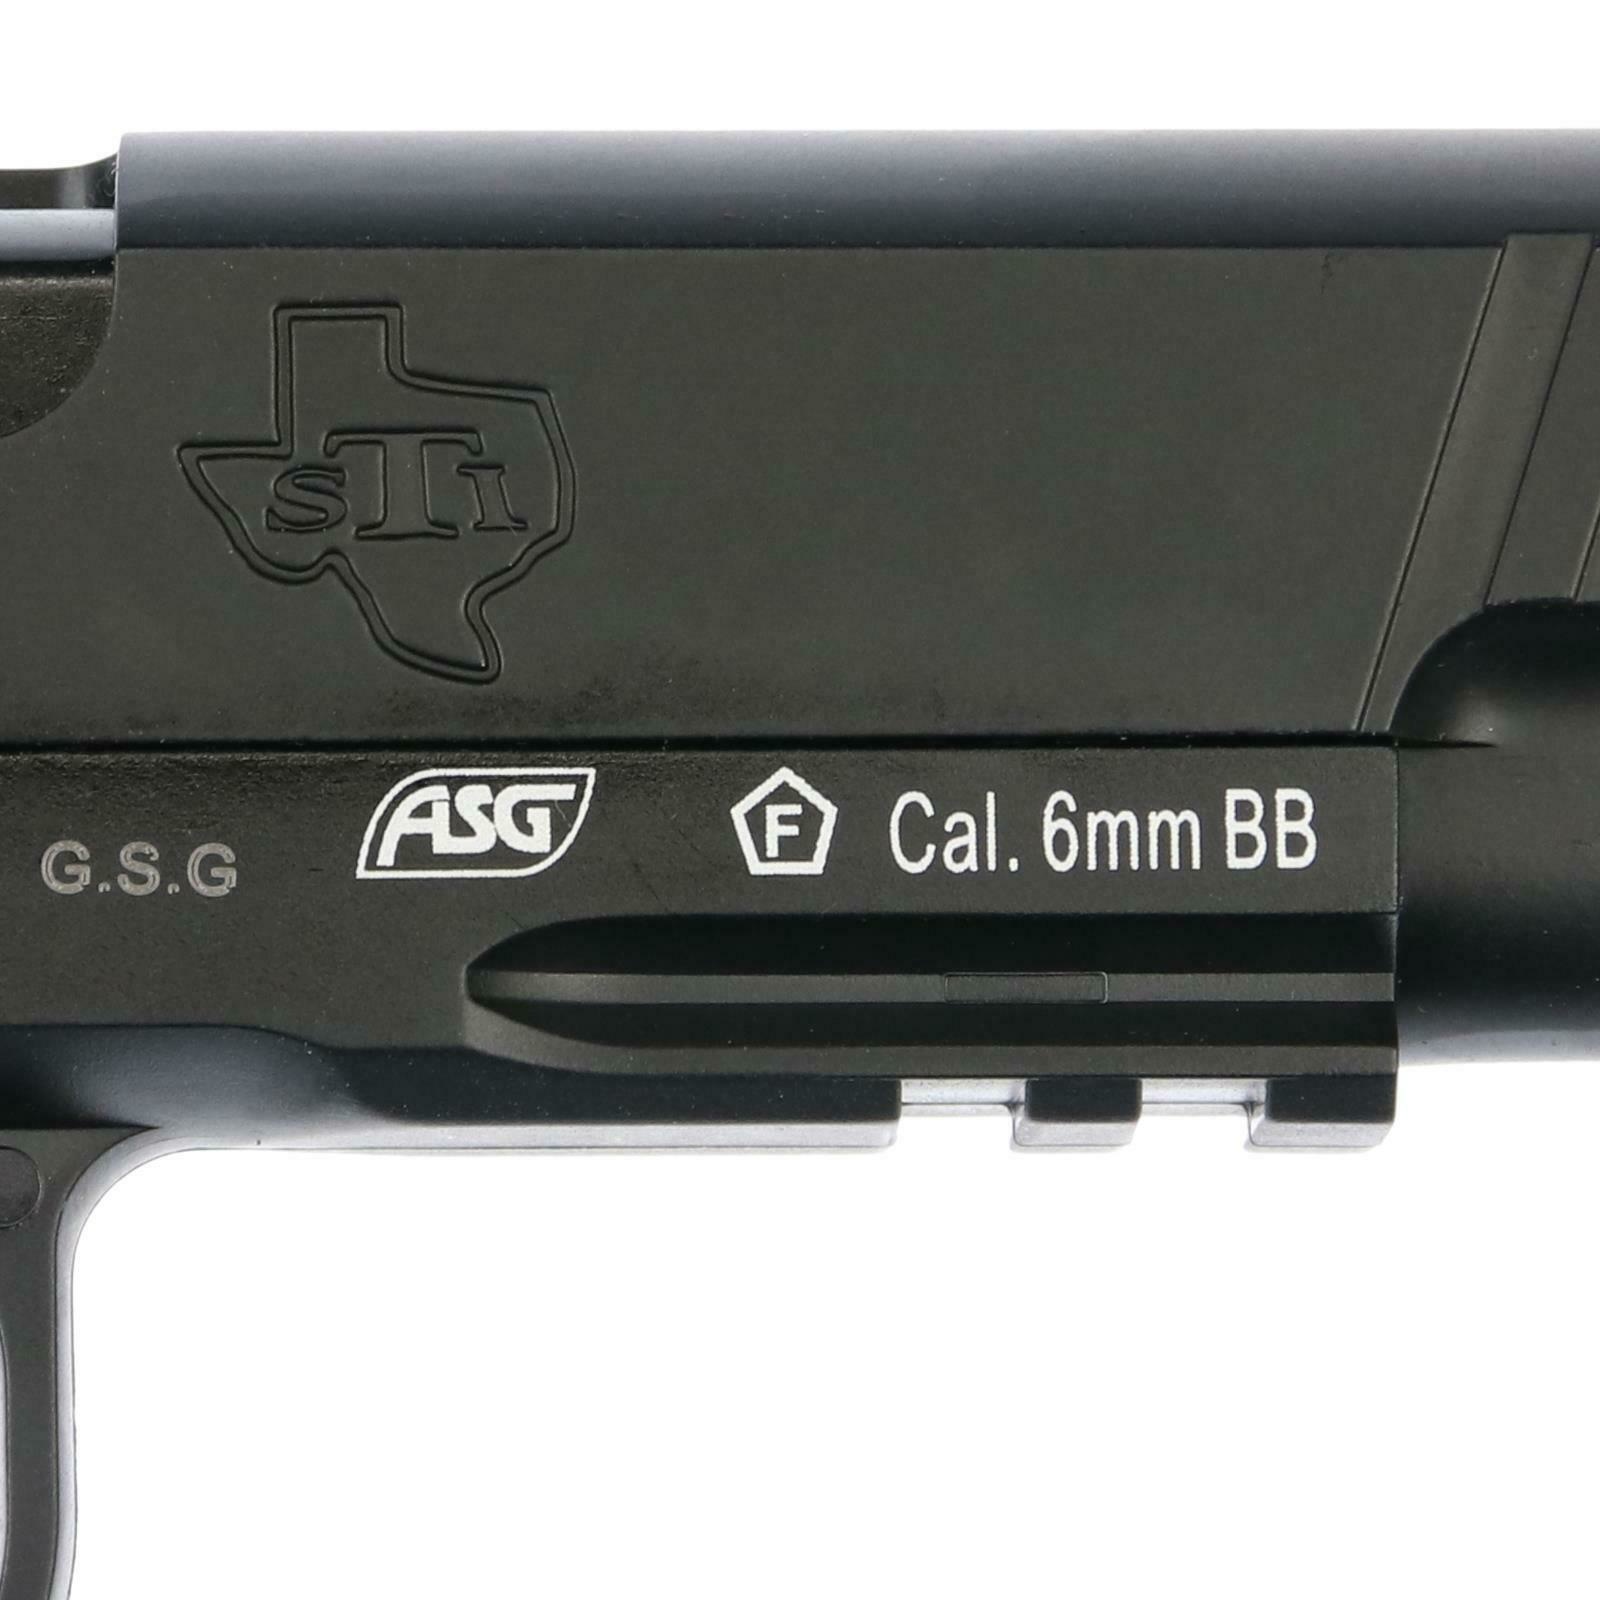 ASG STI Duty One 1911 Co2 6mm BB GBB 2,0 Joule - BK